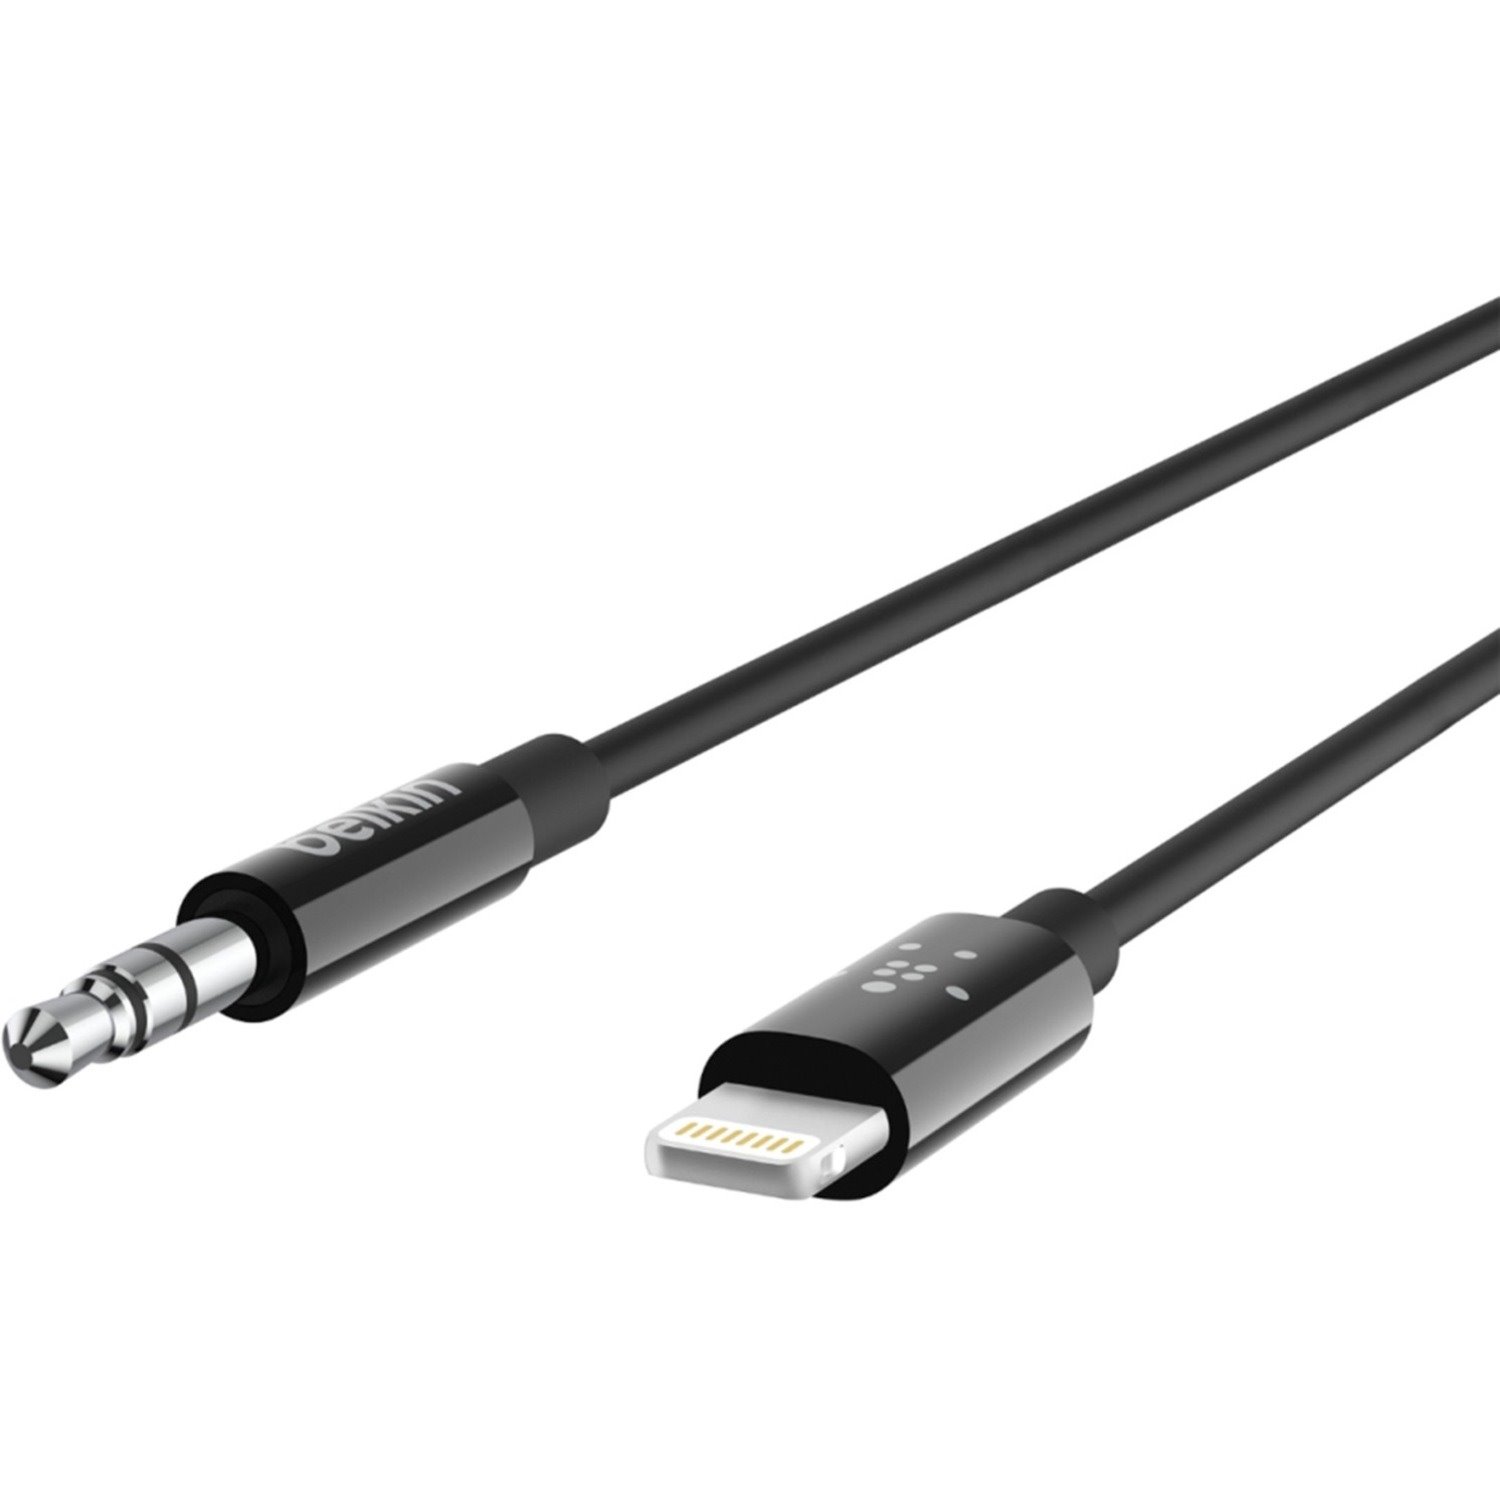 Belkin 91.44 cm Lightning/Mini-phone Audio/Data Transfer Cable for Audio Device, Speaker, iPhone